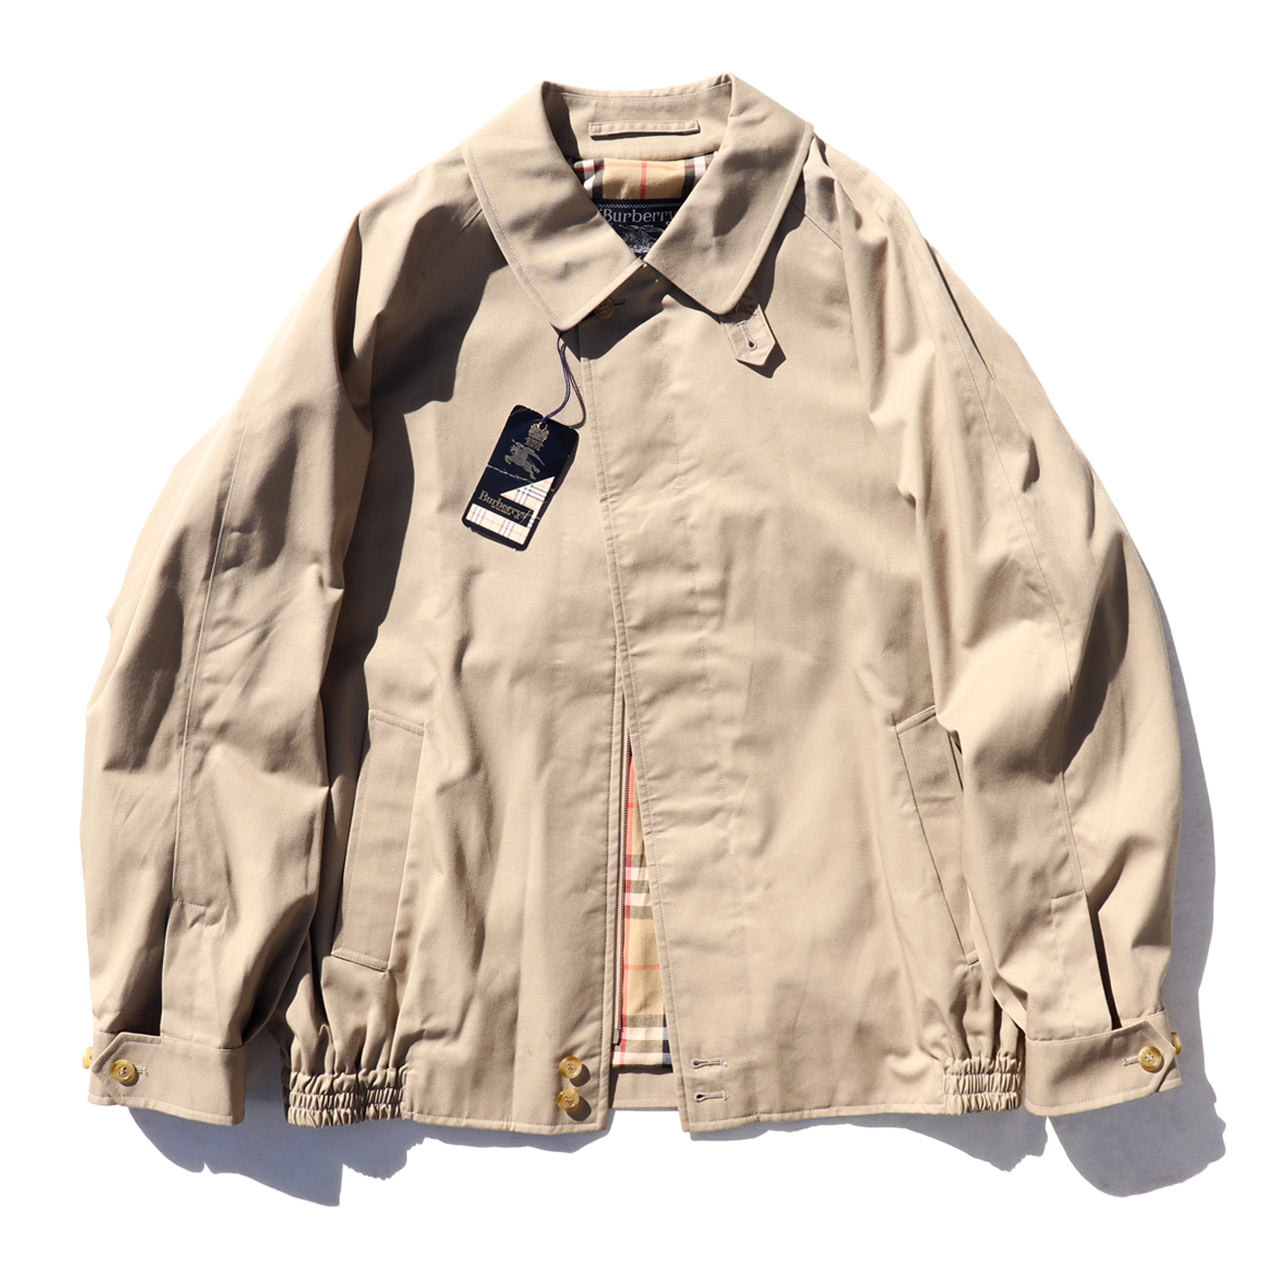 POST JUNK / 90's BURBERRYS “PAPWORTH” Harrington Jacket Made In 